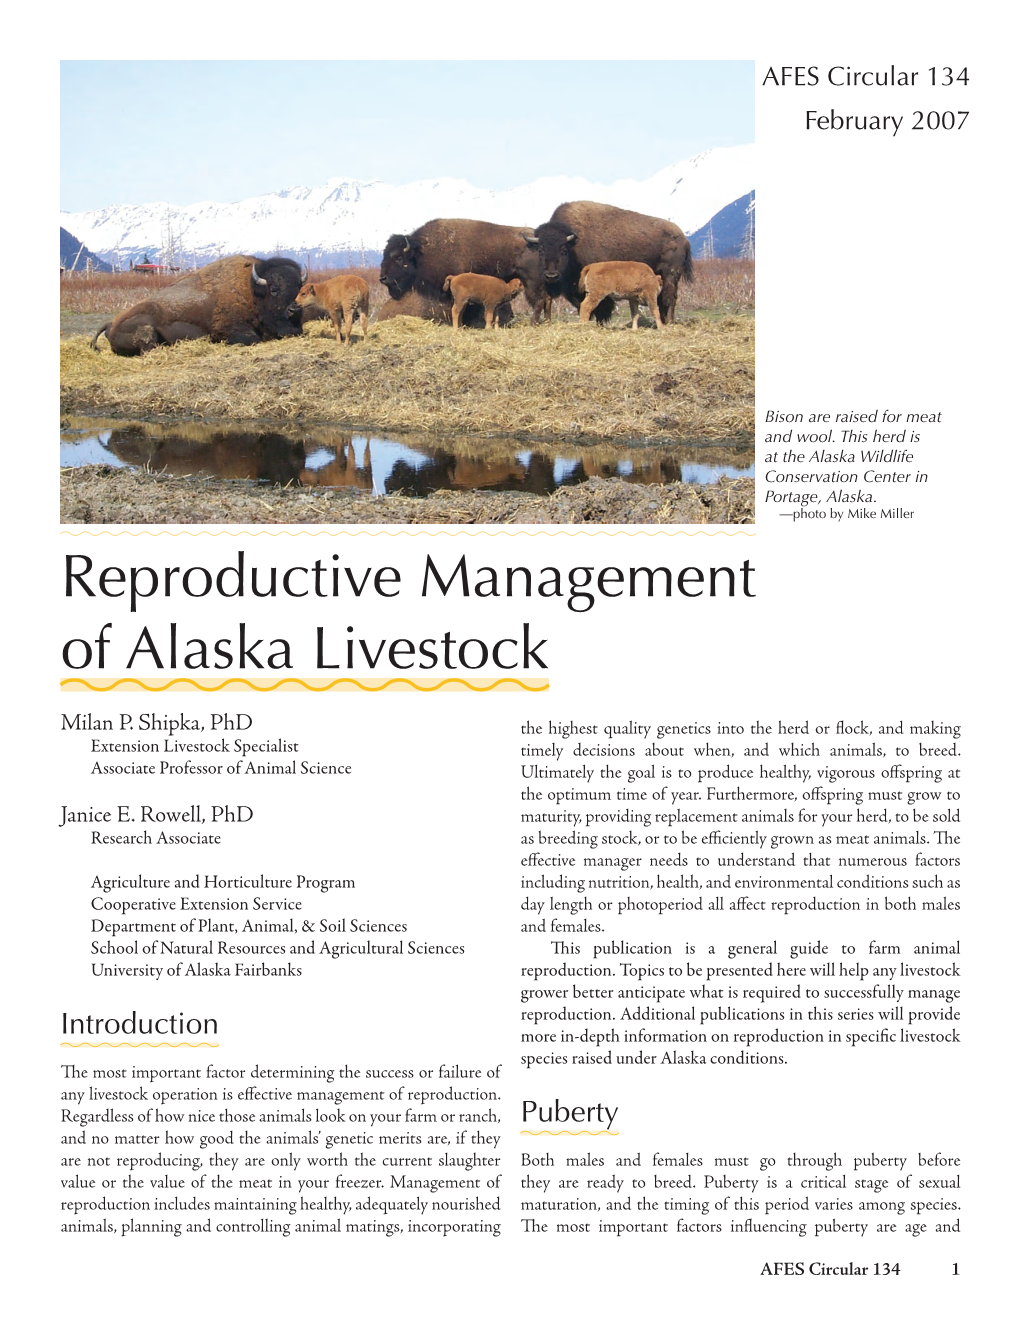 Reproductive Management of Alaska Livestock, Circular